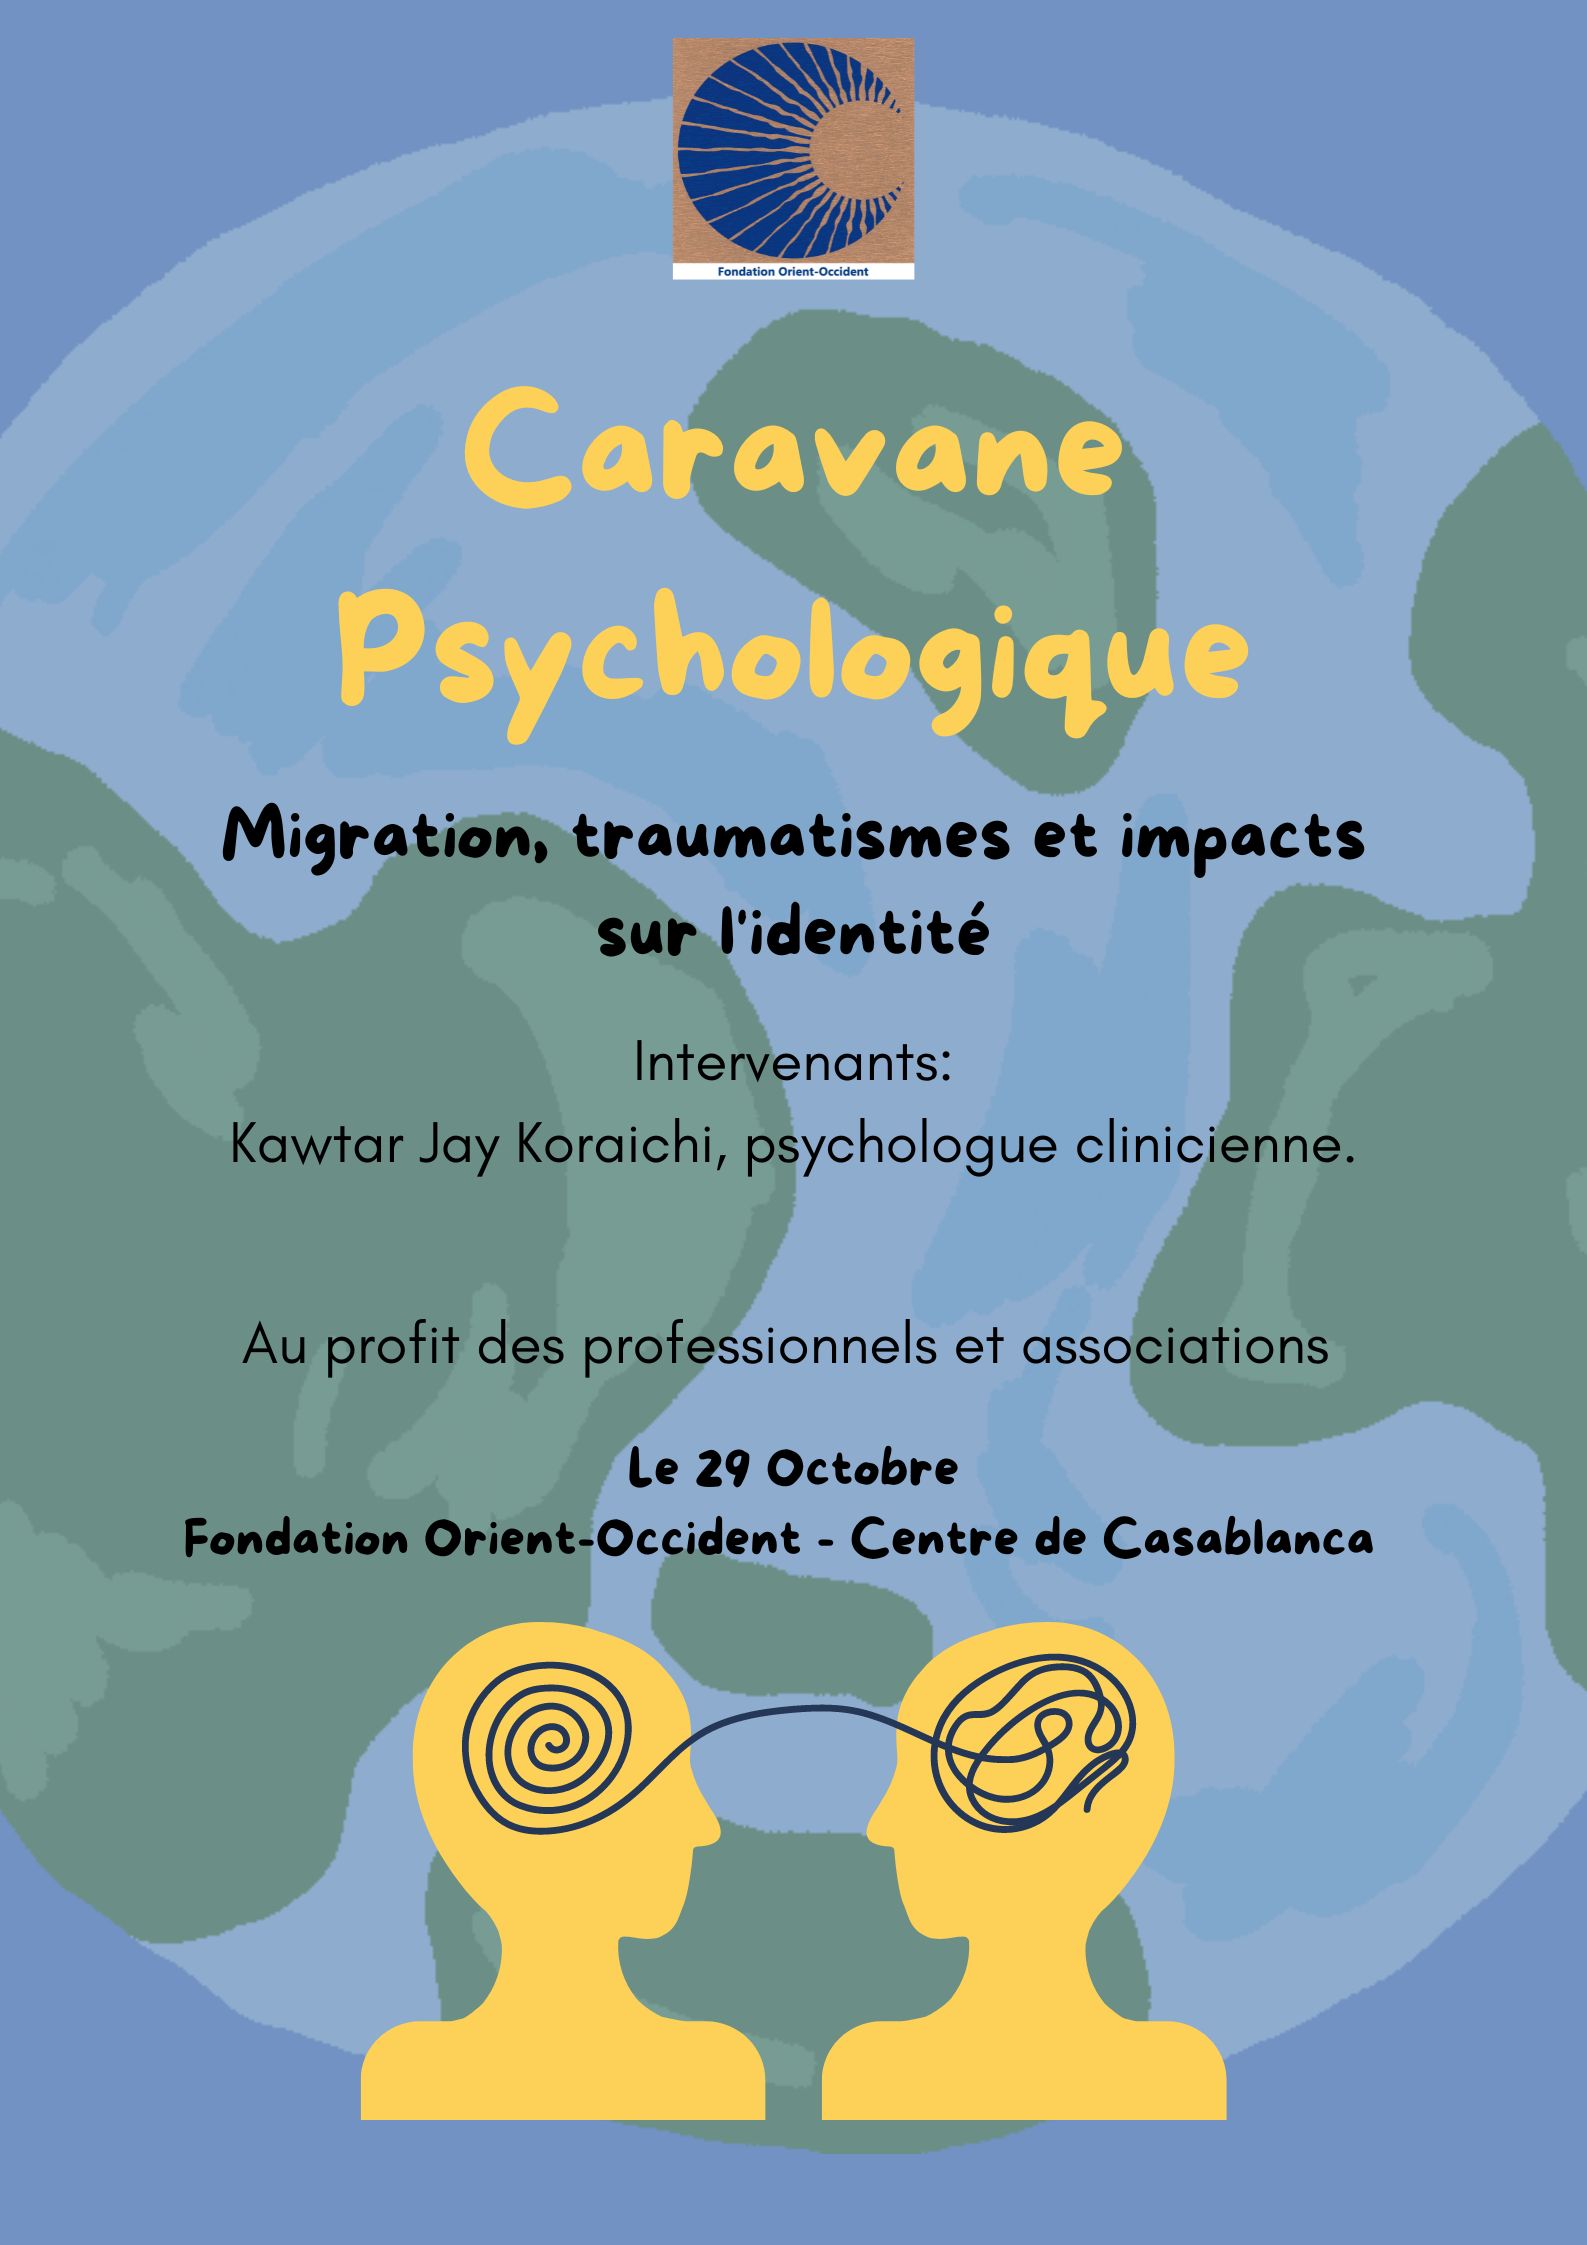 Psychological caravan – New meeting